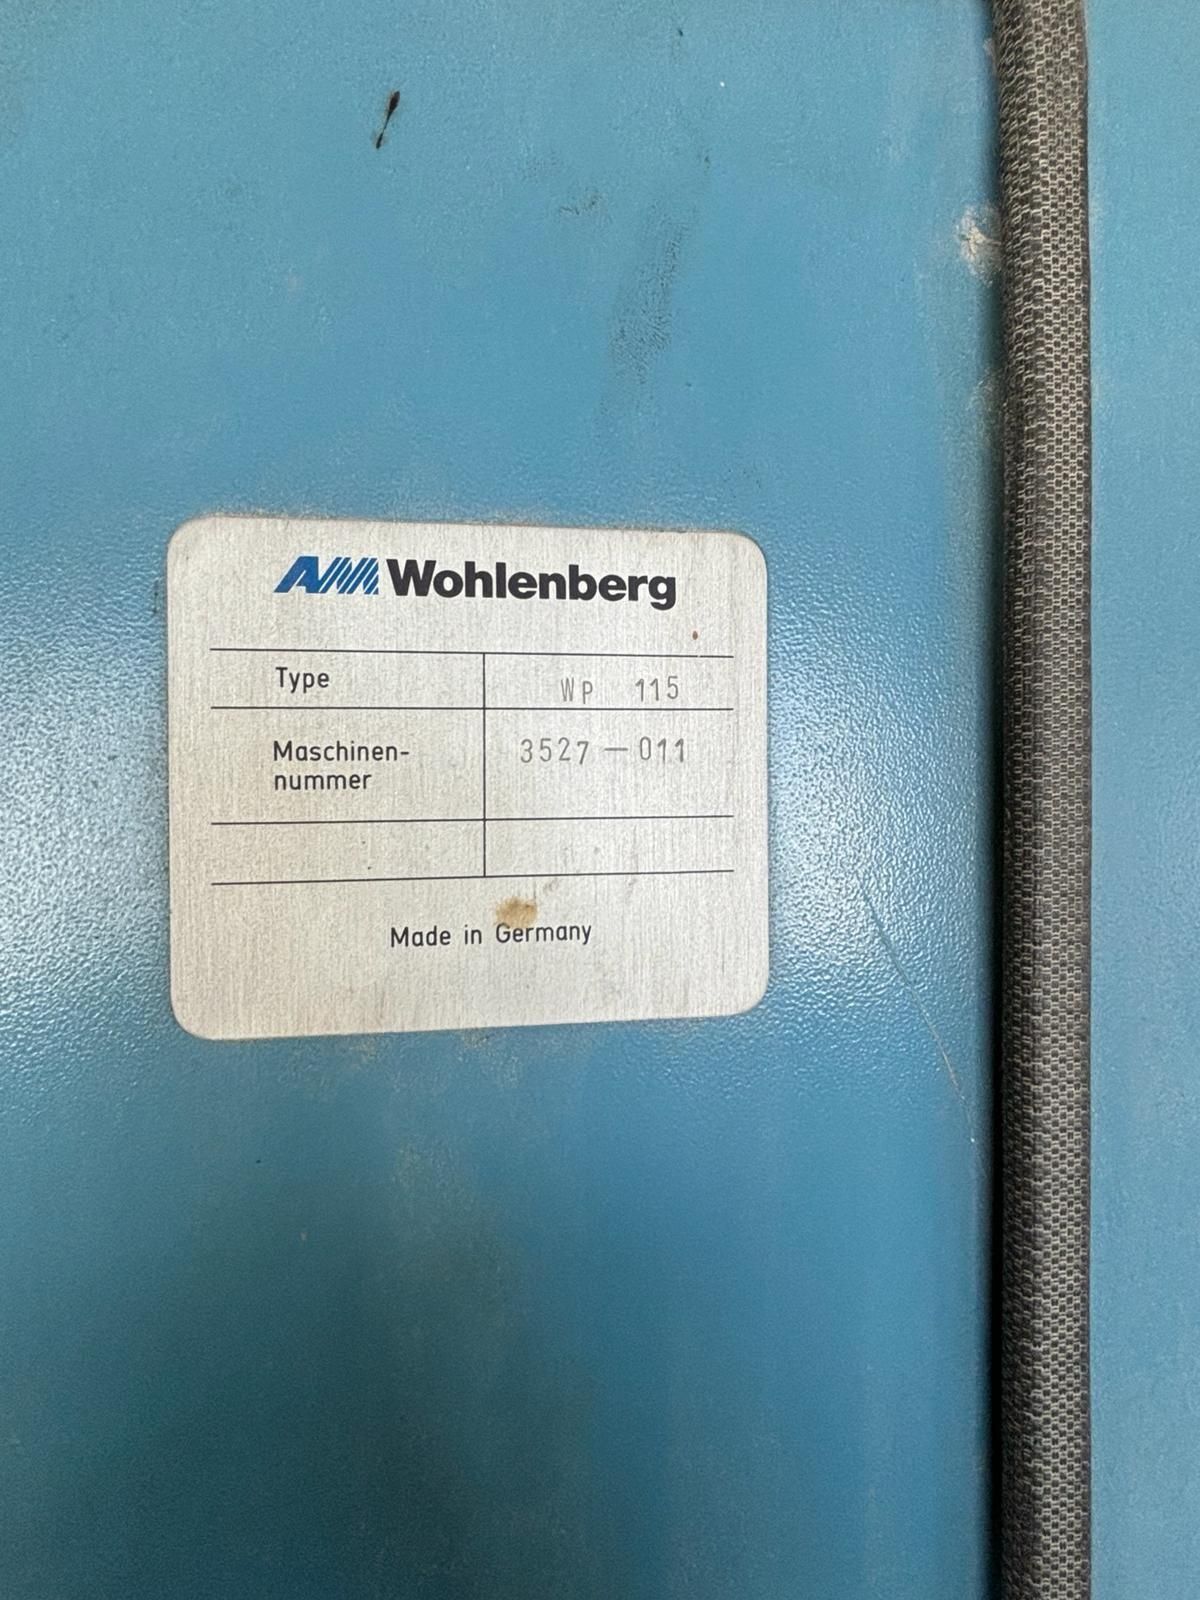 Wohlemberg 115 de 1996